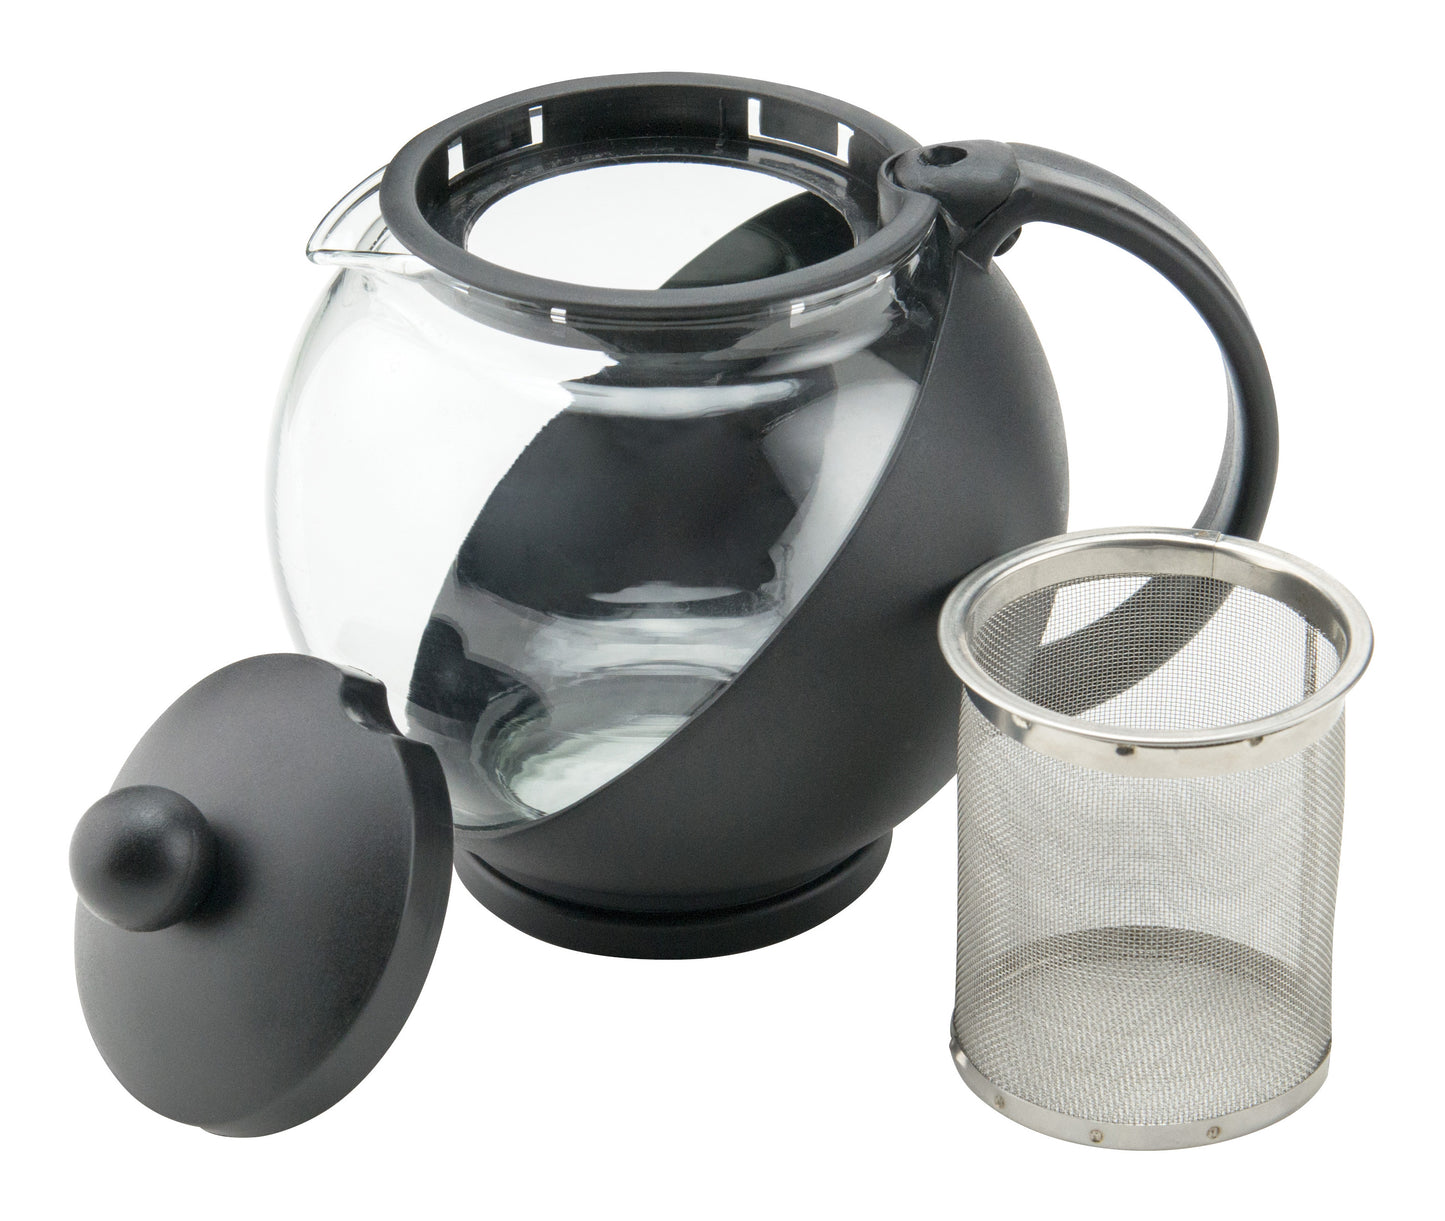 25 oz Glass Teapot with Infuser Basket, Black